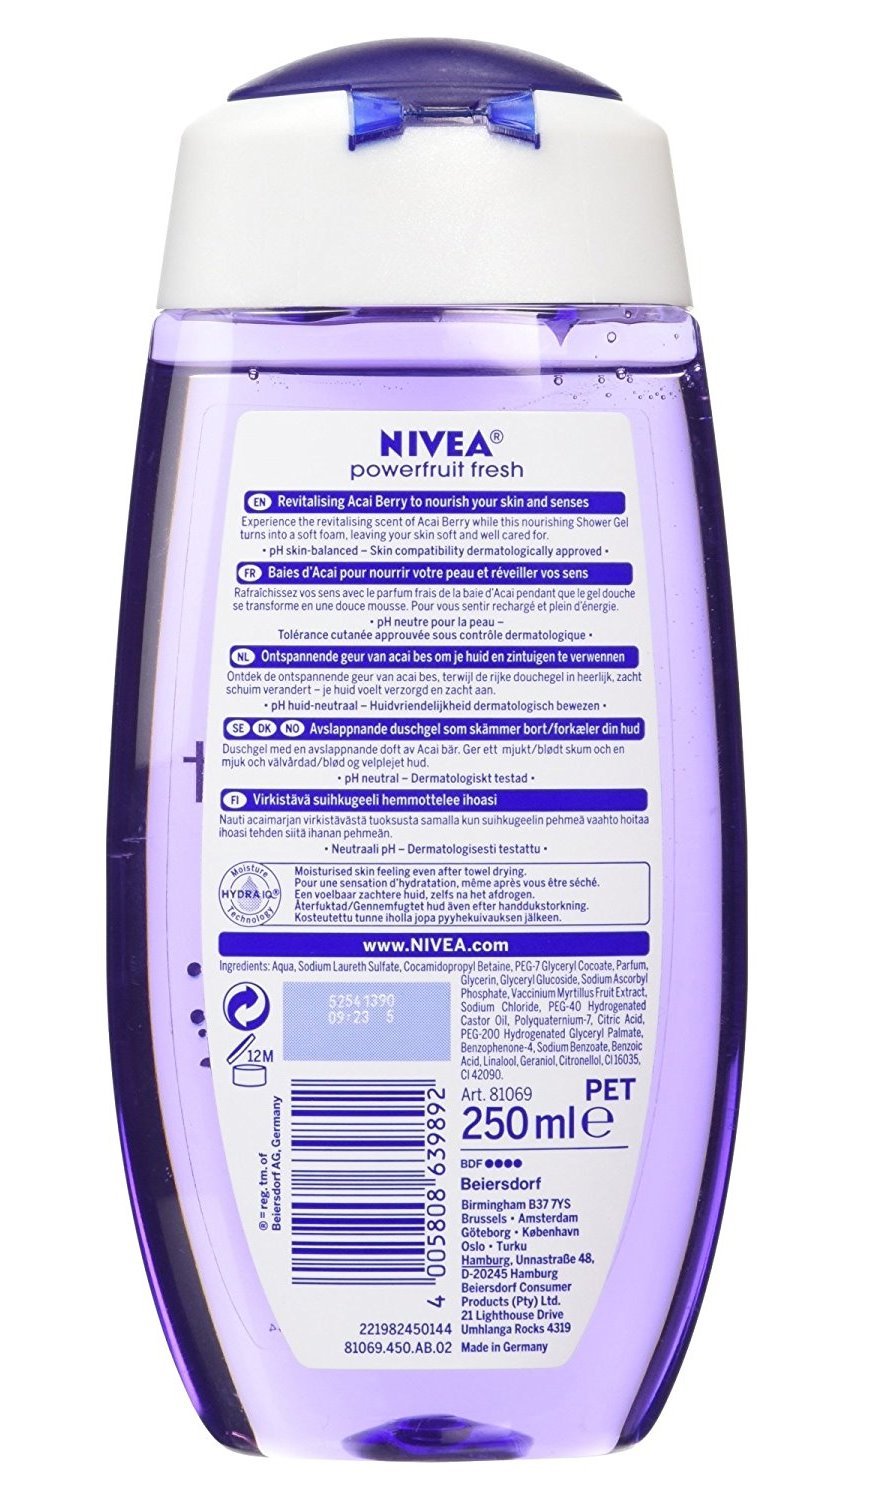 Nivea Powerfruit Fresh Shower Gel Review